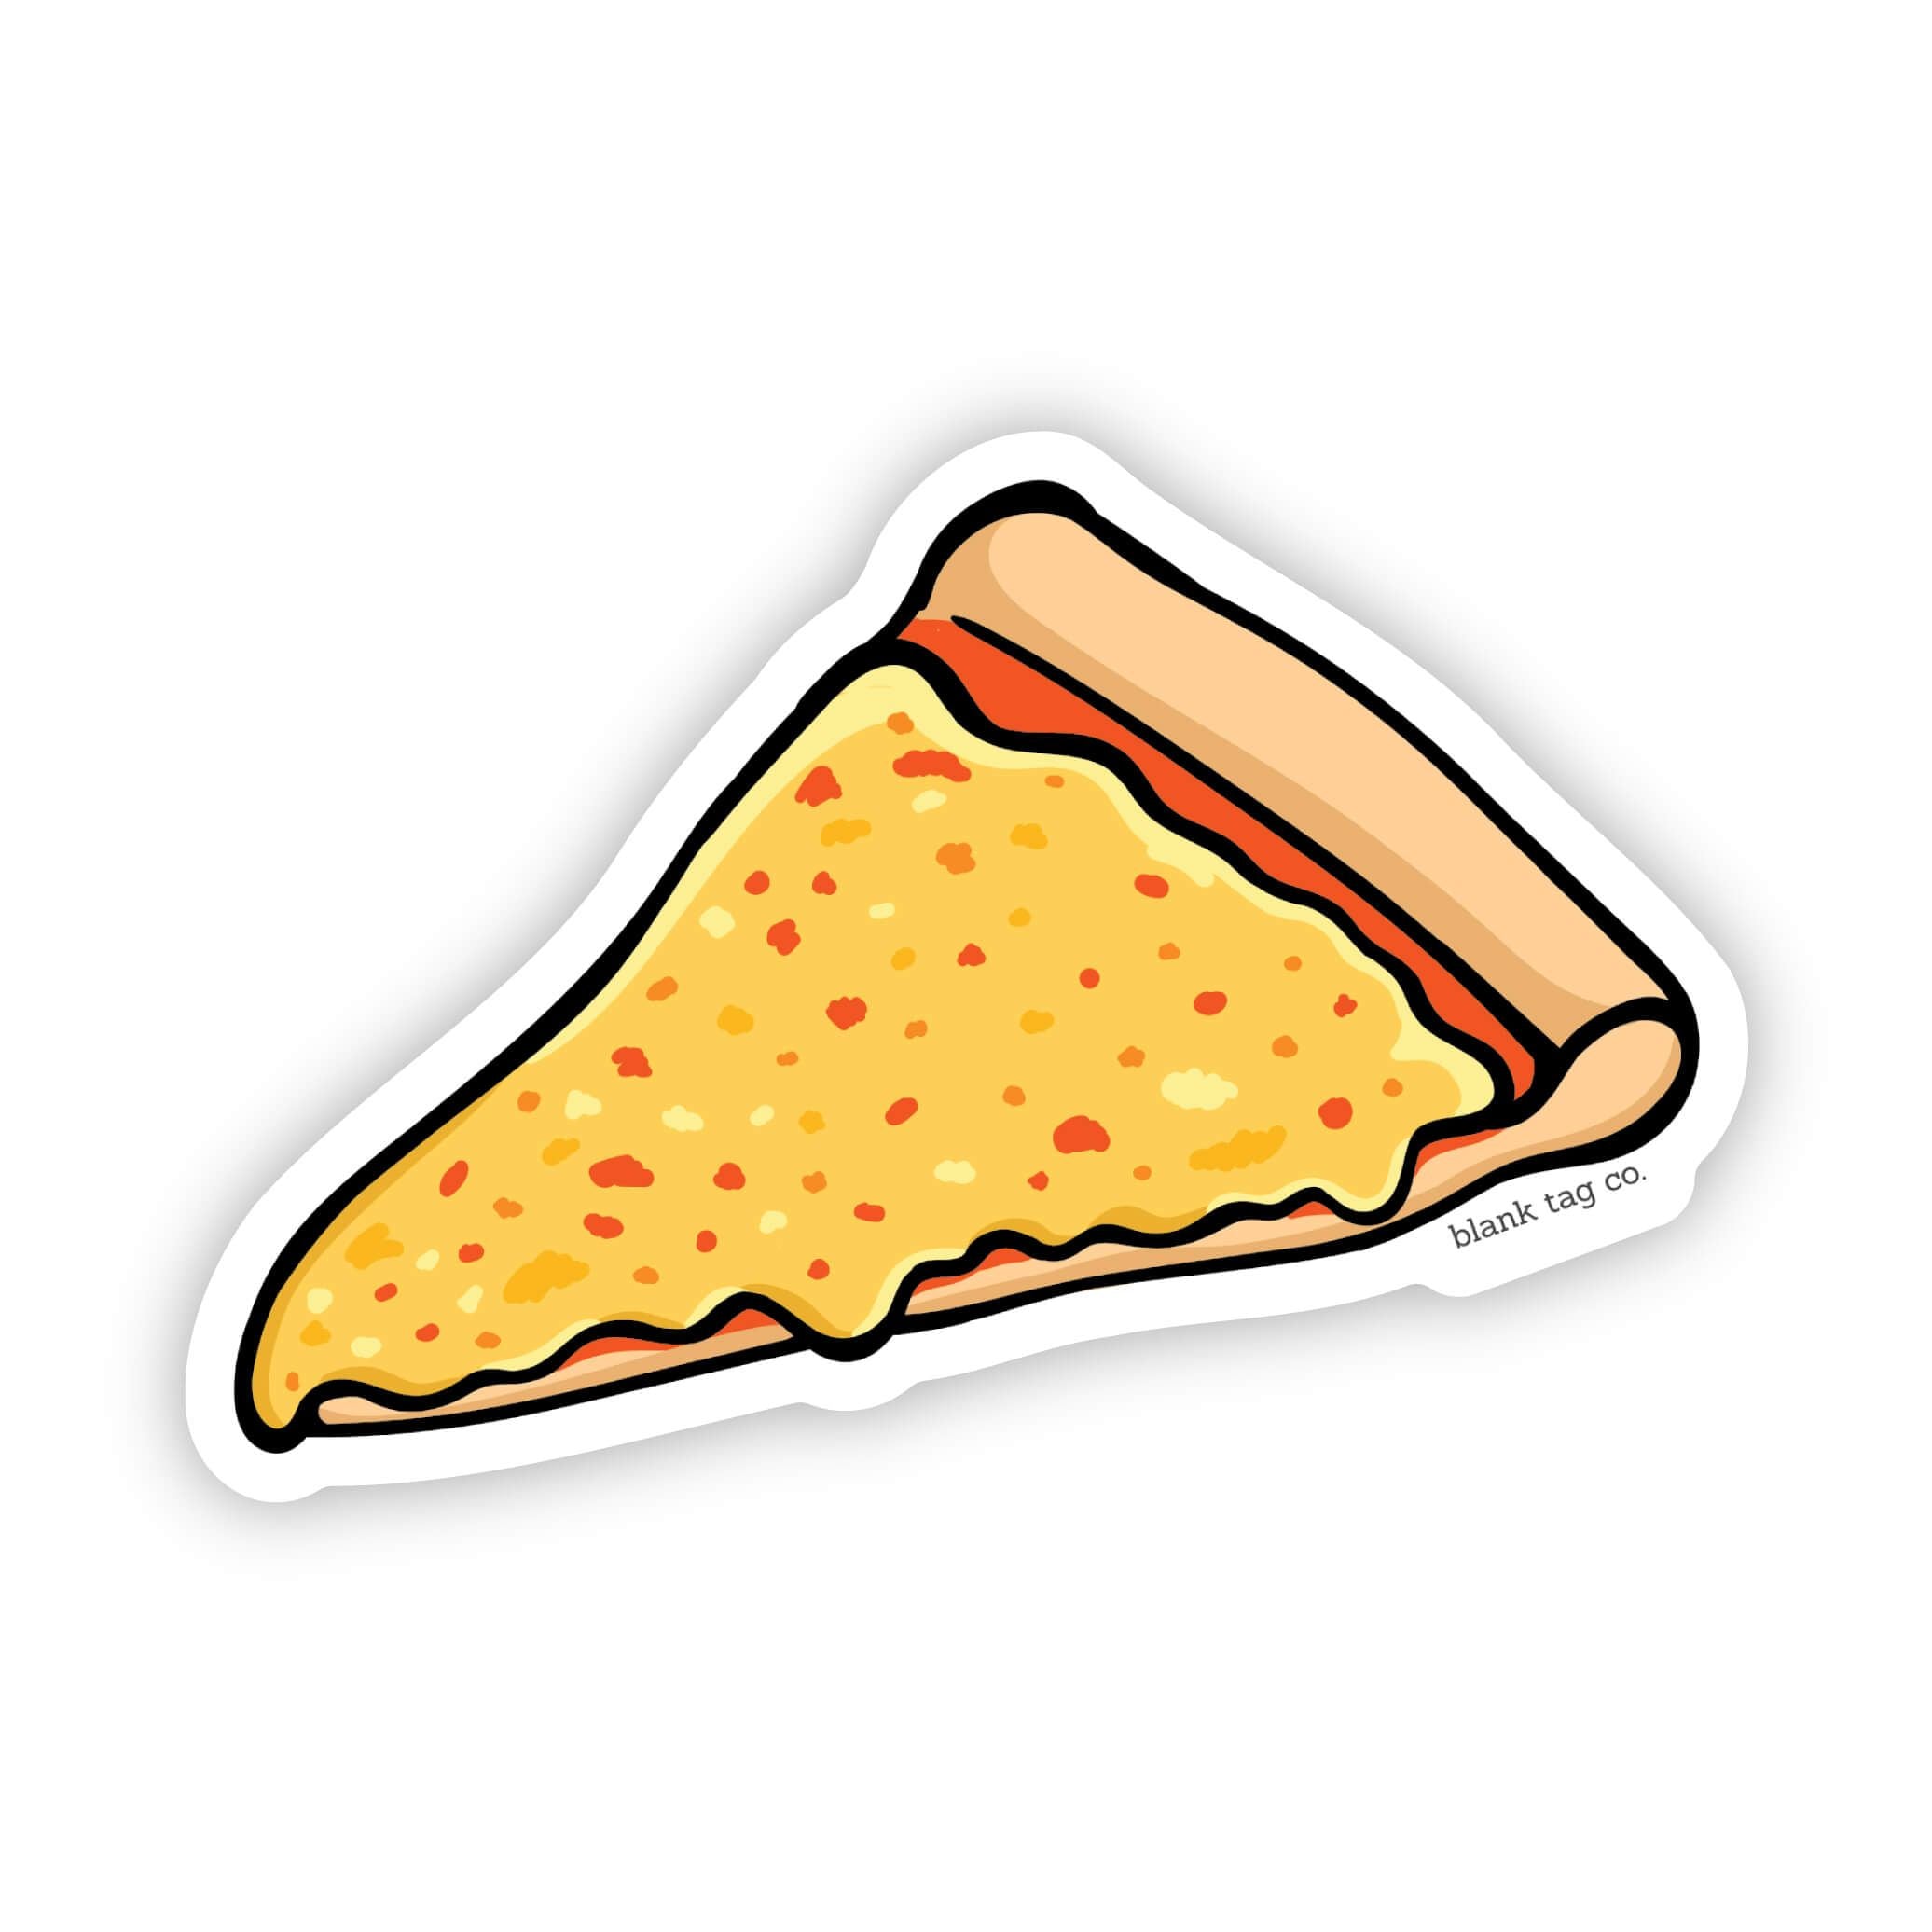 The Cheese Pizza Slice Sticker